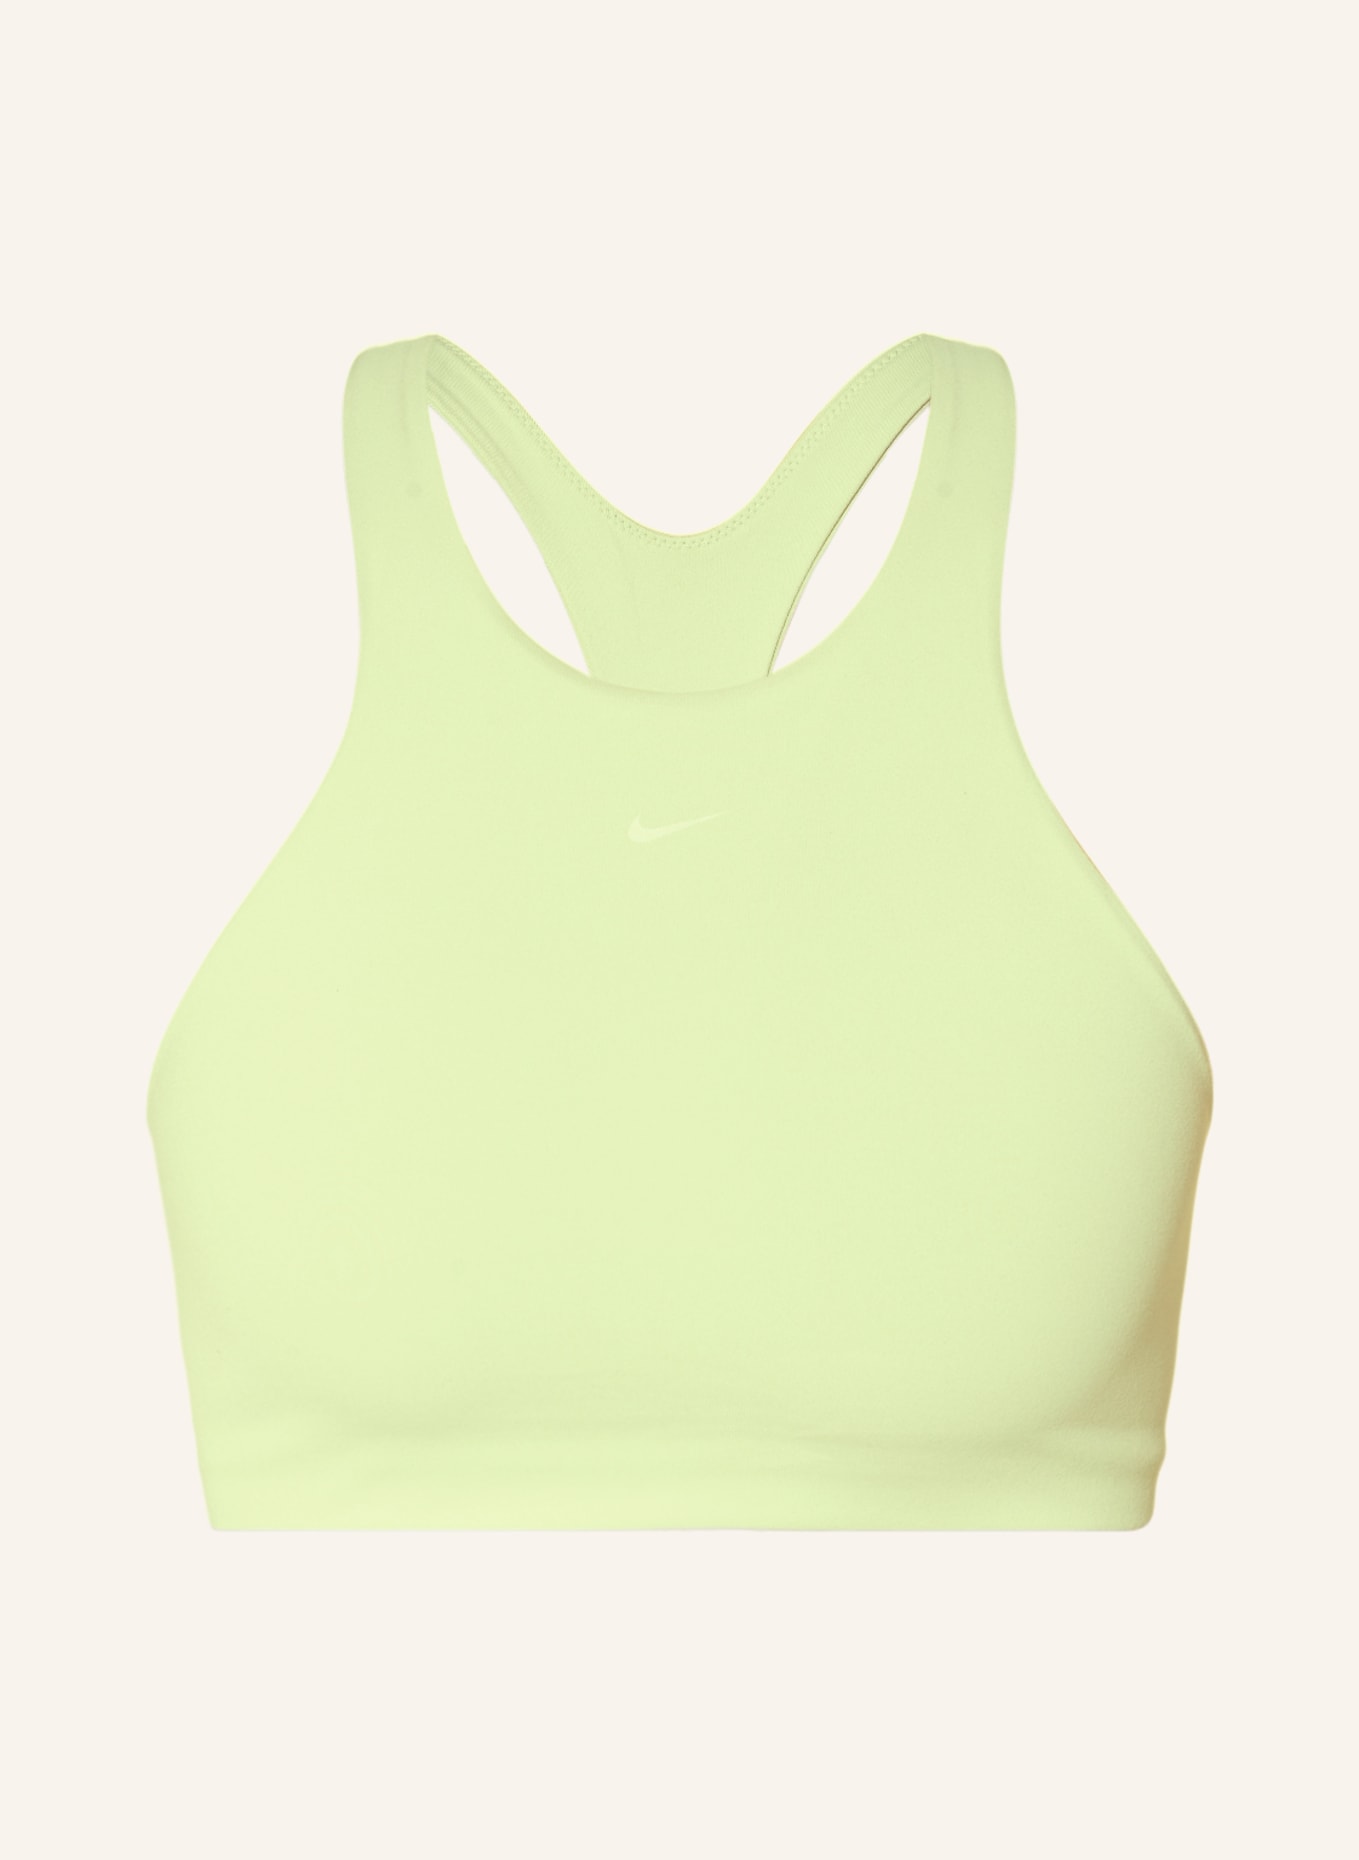 Nike Sports bra YOGA ALATE in light green